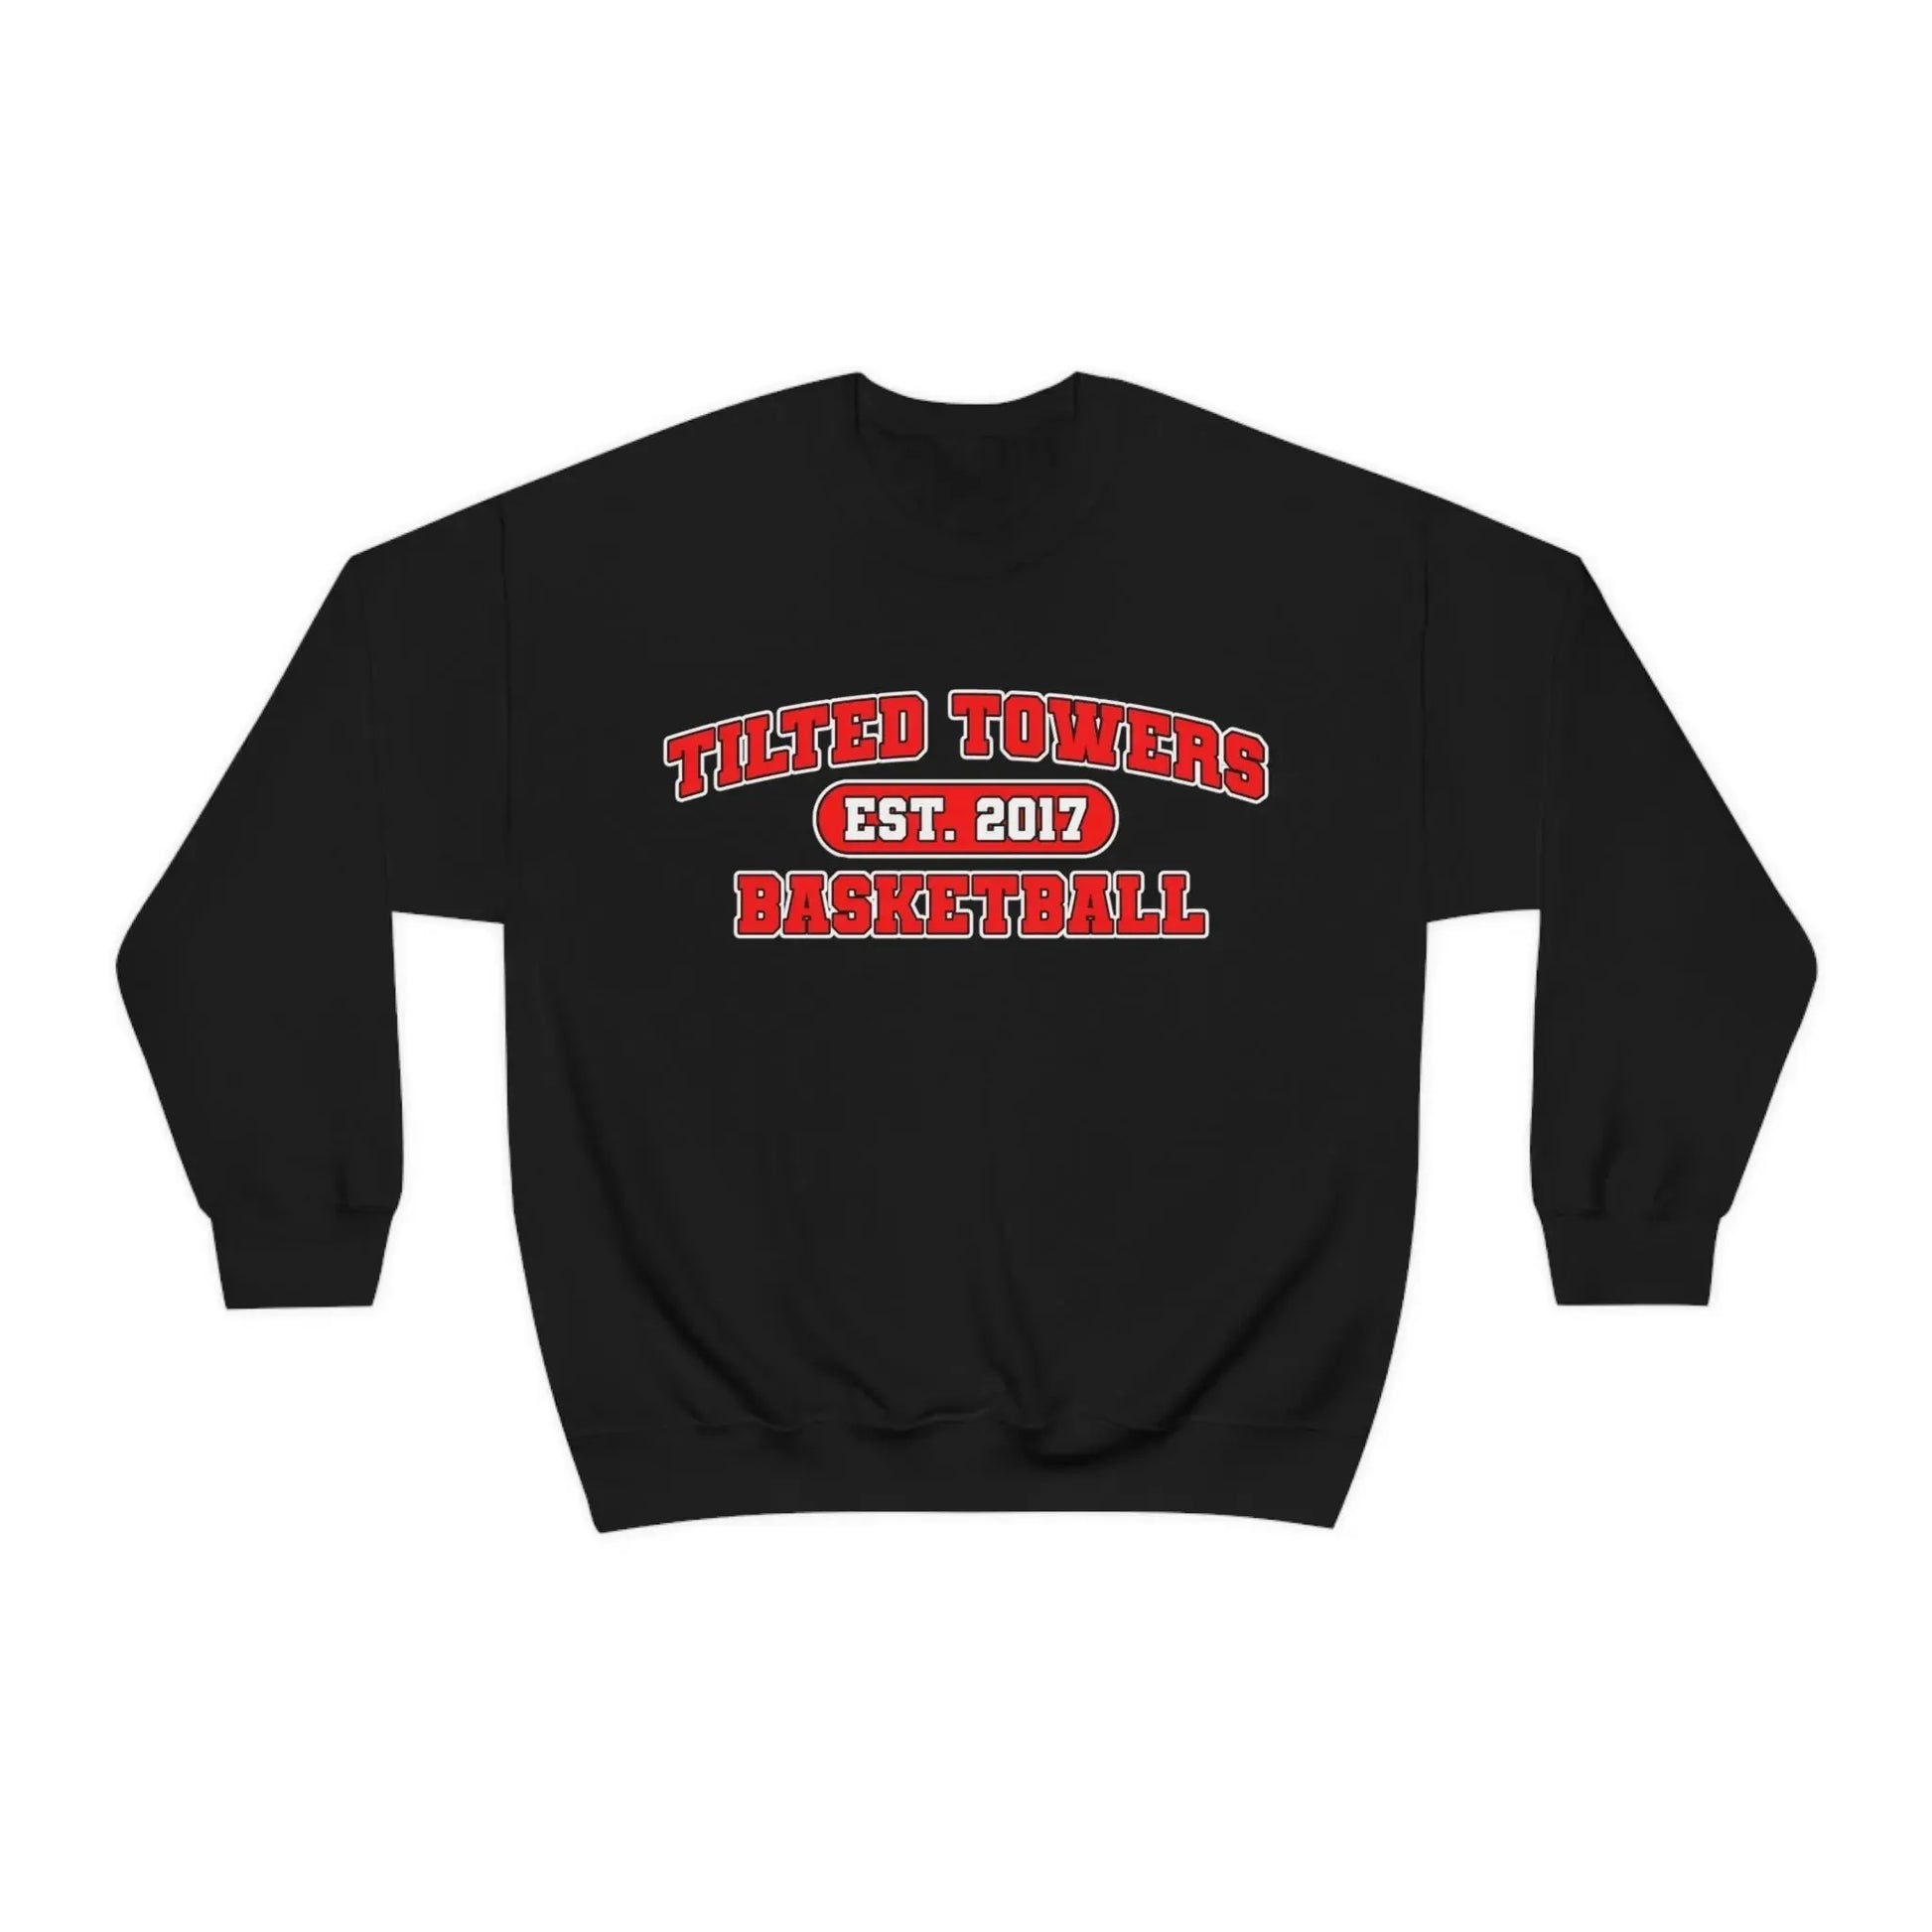 Tilted Towers Basketball Team Sweatshirt - Failure International failureinternational.com store brand tiktok instagram